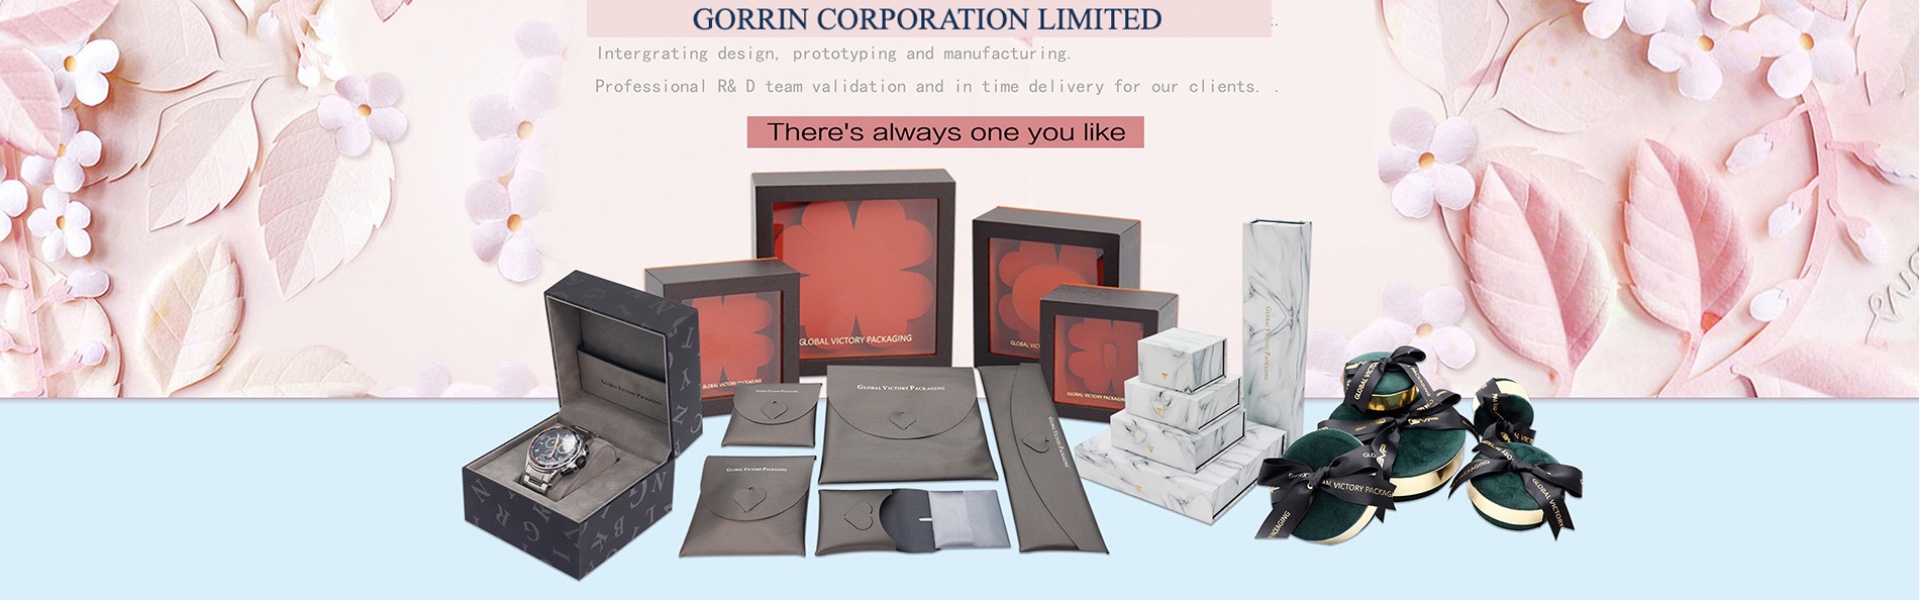 paper box,jewelry,jewelry box,Gorrin corporation limited